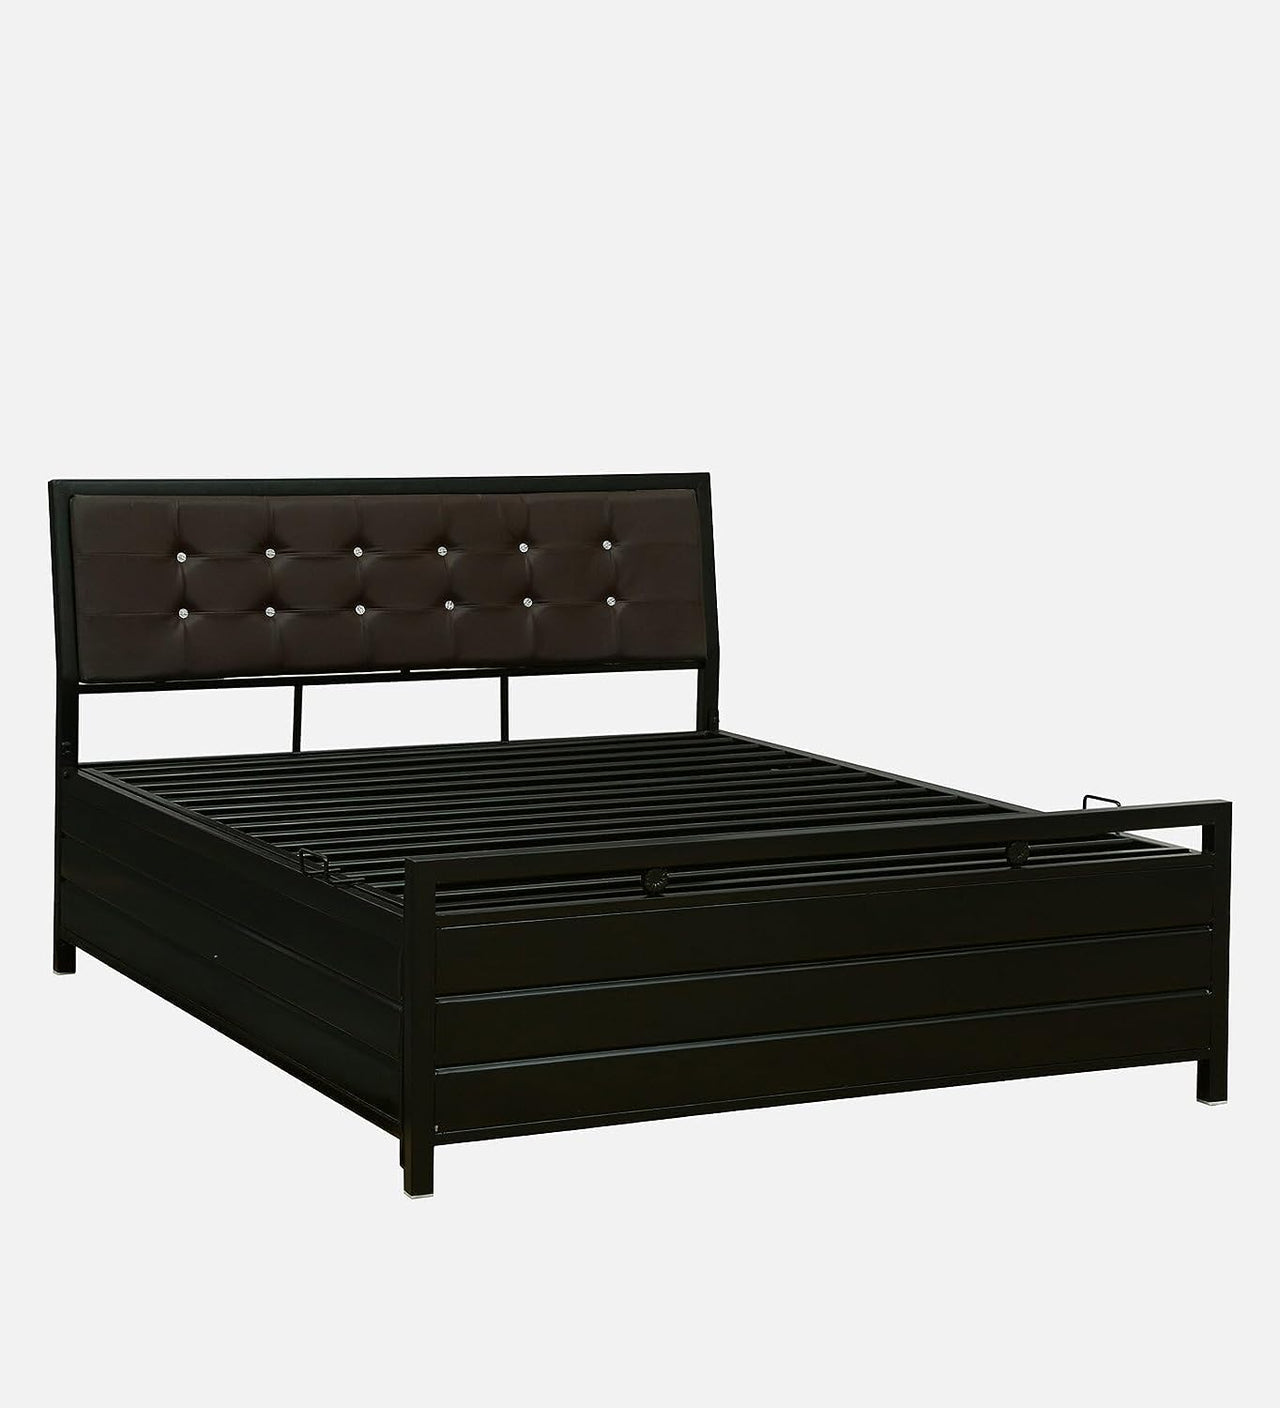 Heath Hydraulic Storage Single Metal Bed with Black Cushion Headrest (Color - Black)